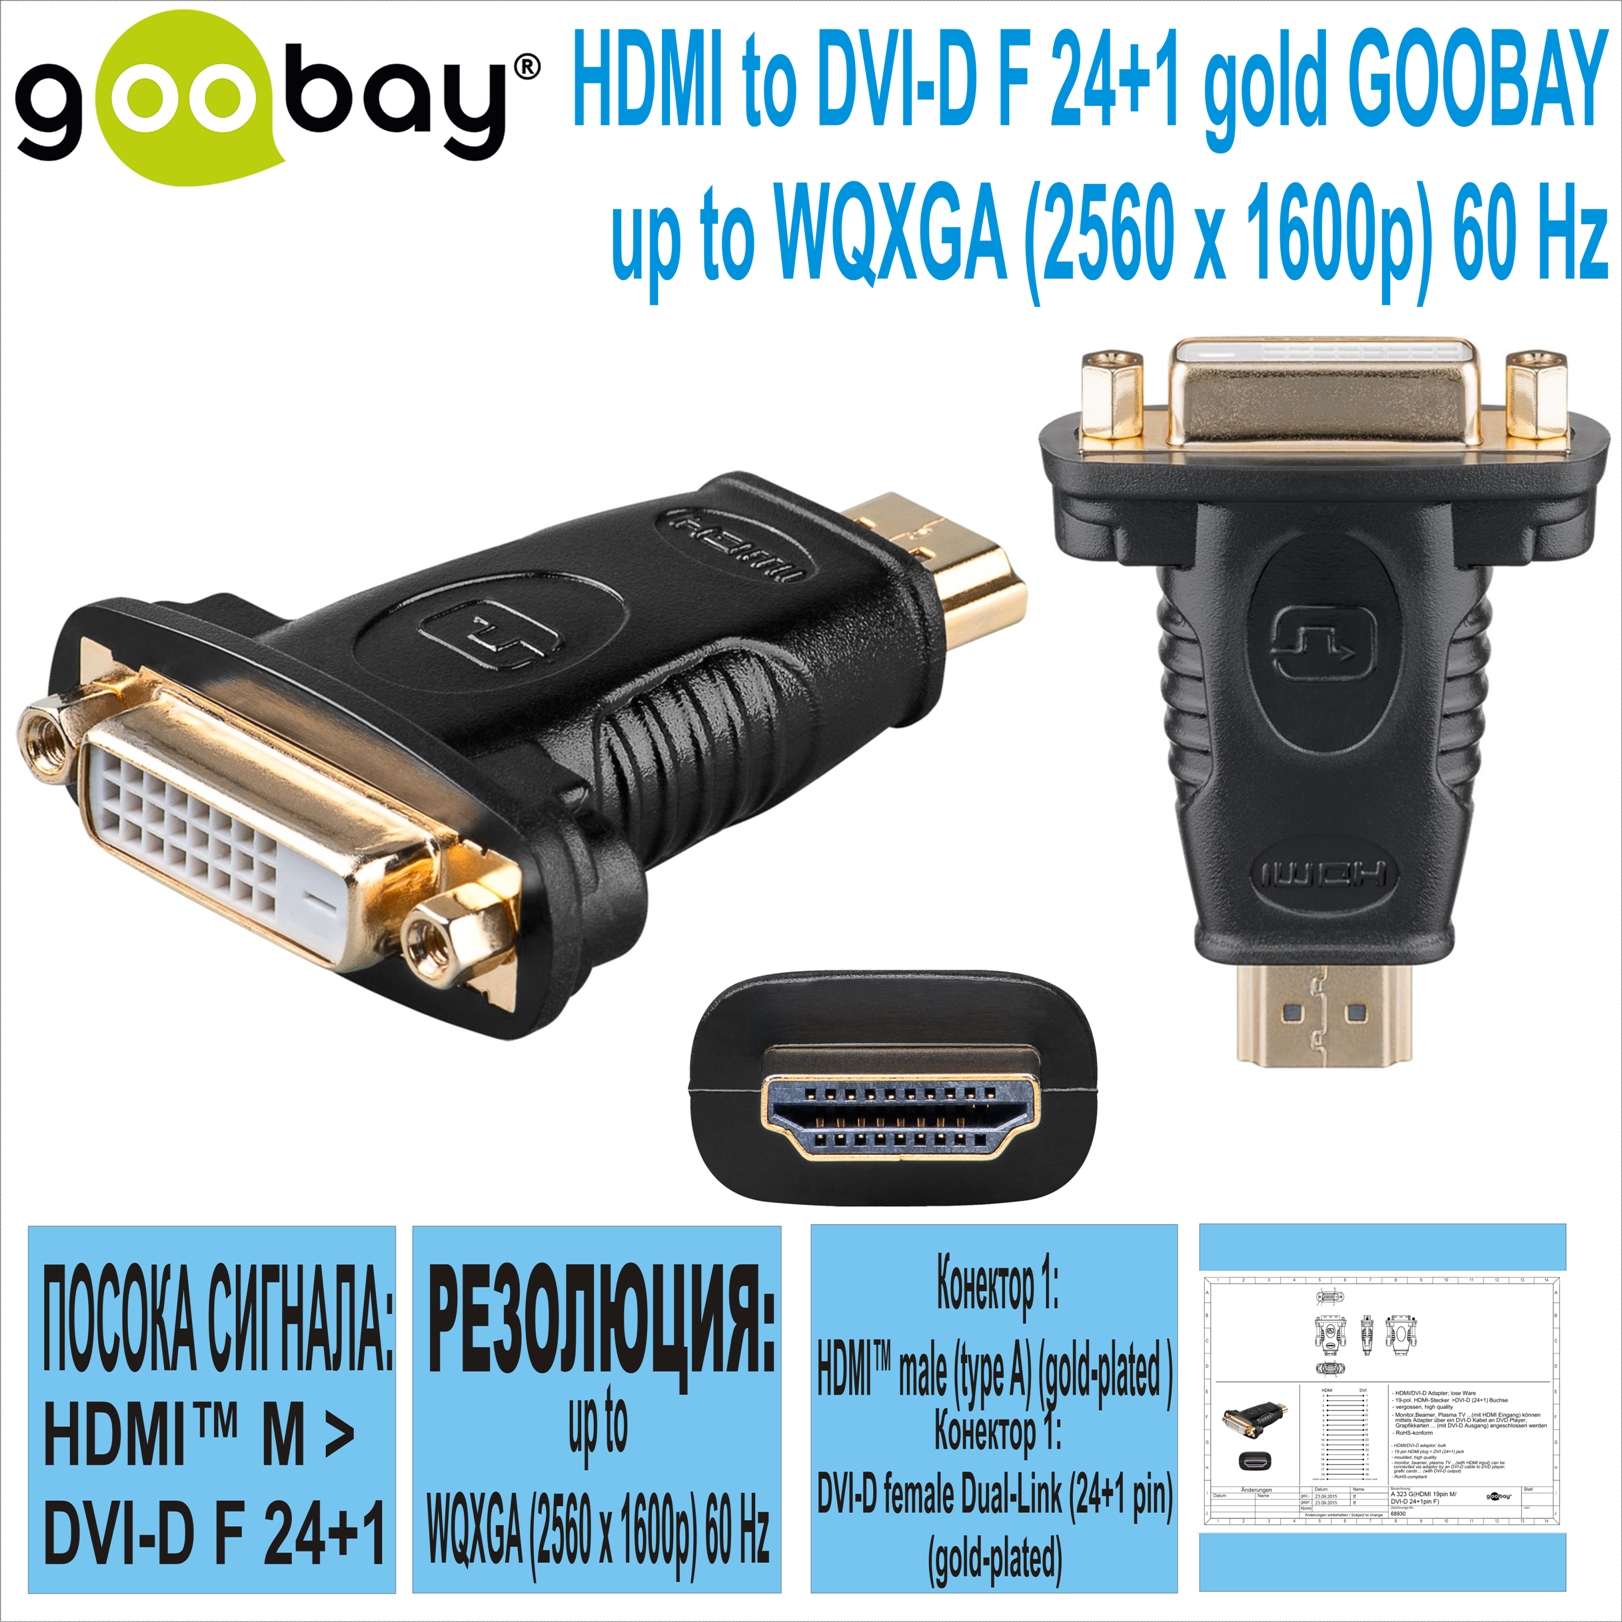 HDMI to DVI-D F 24+1 gold GOOBAY